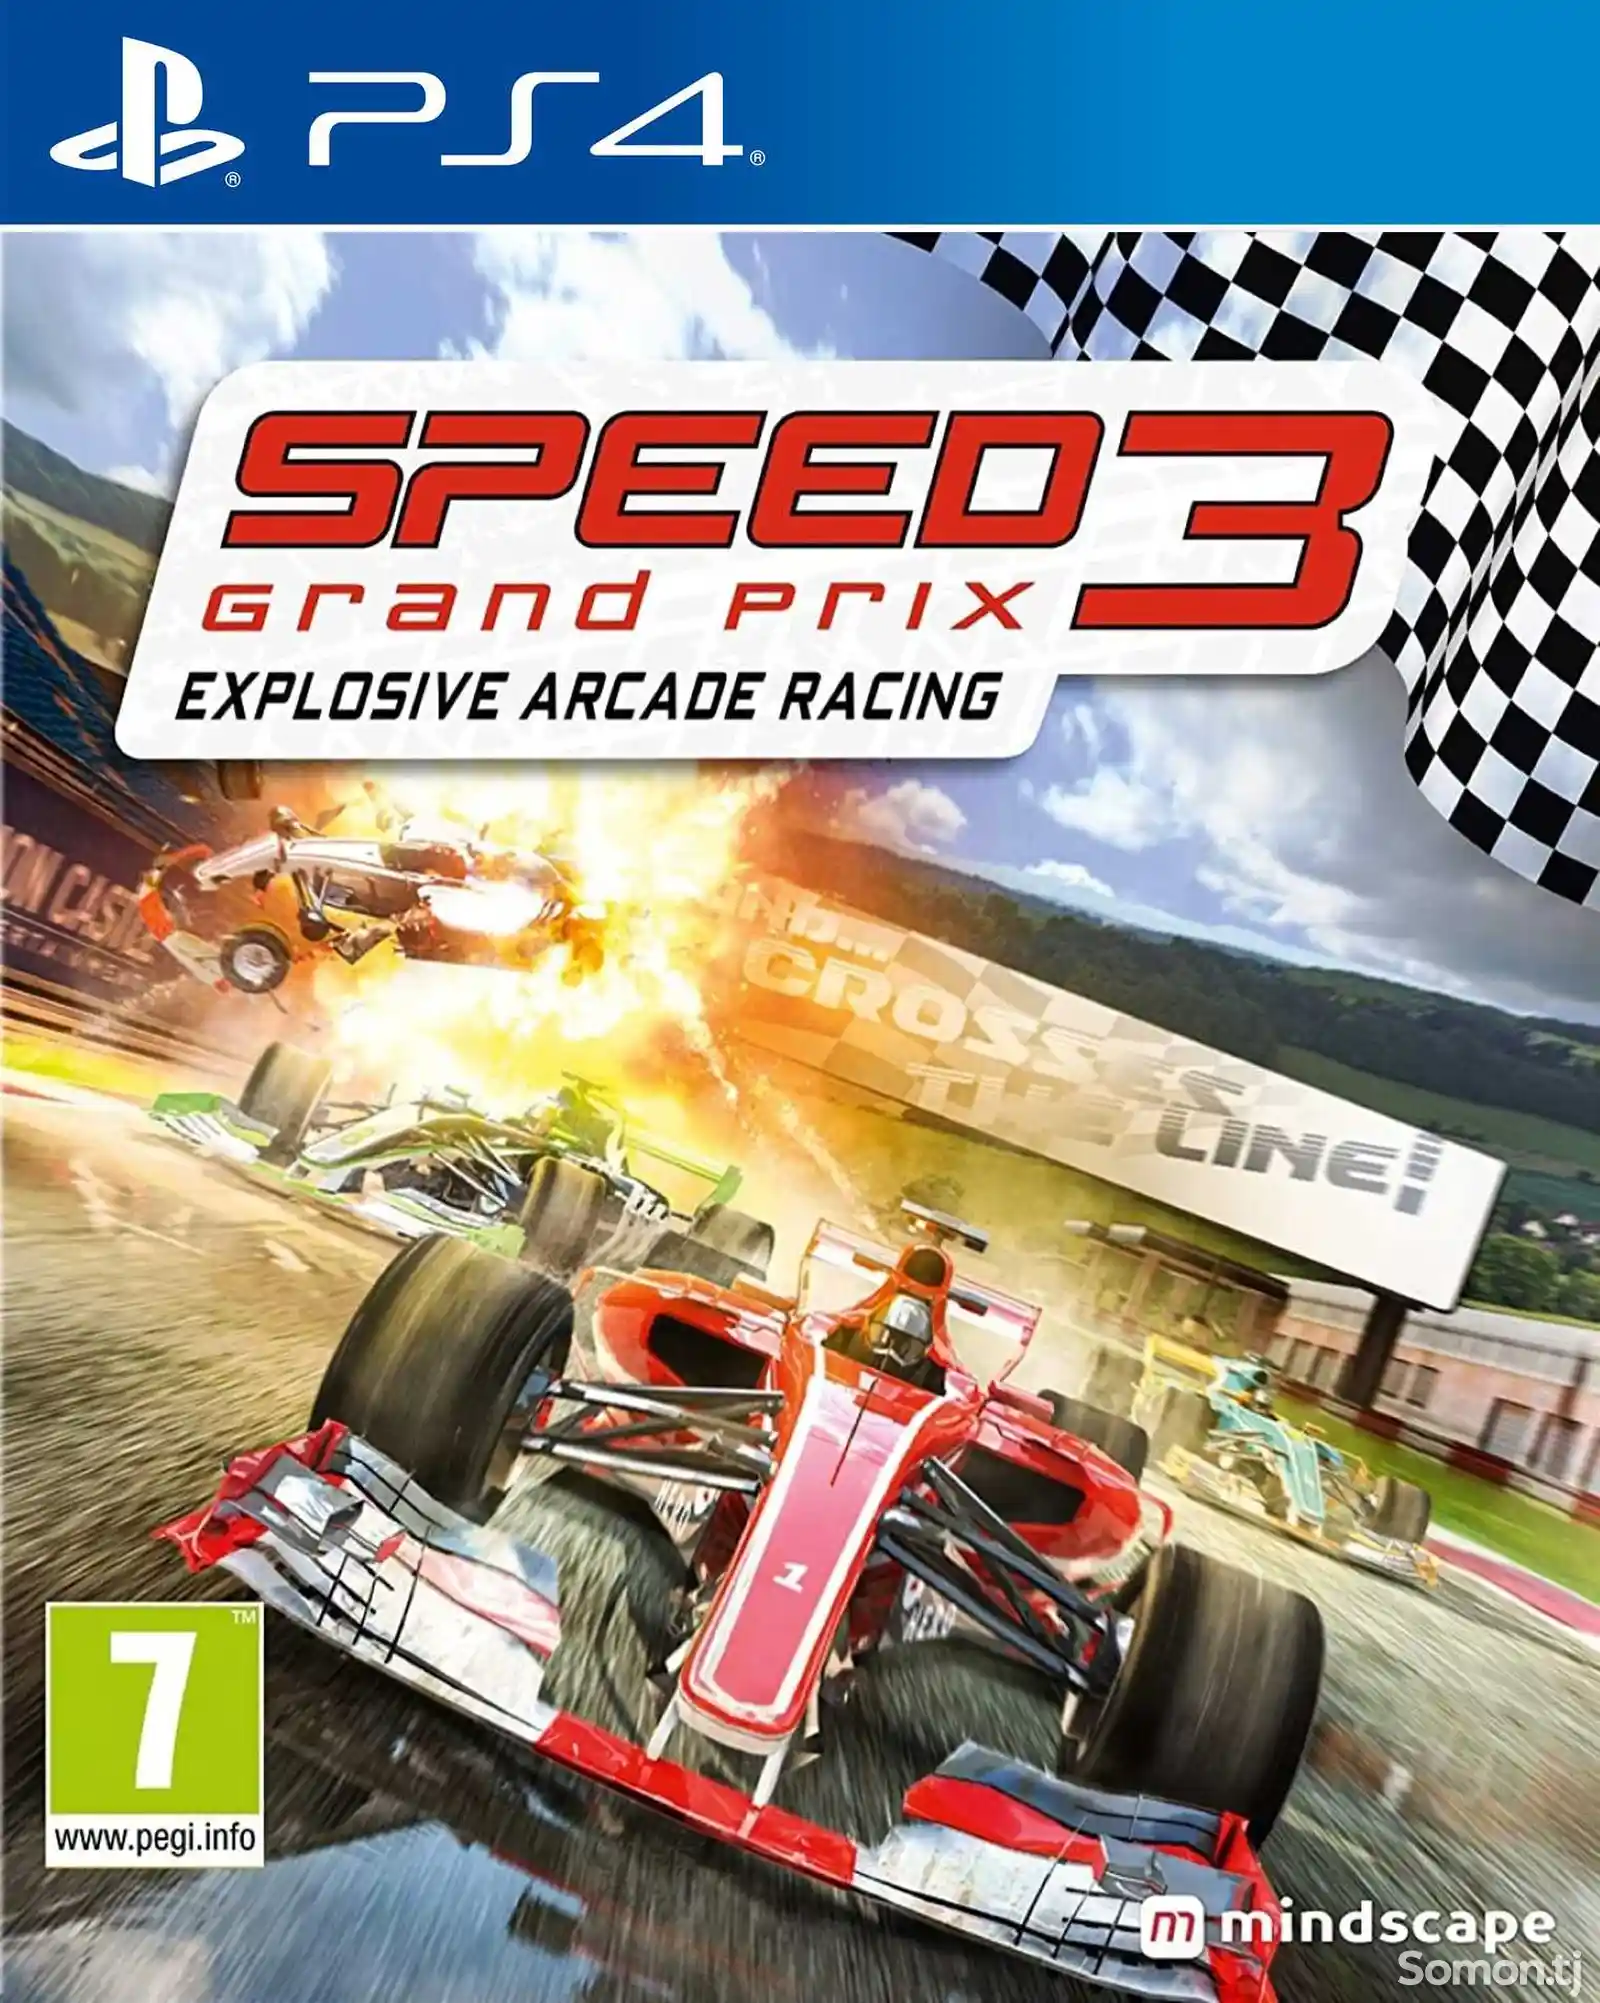 Игра Speed 3 grand prix для PS-4 / 5.05 / 6.72 / 7.02 / 7.55 / 9.00 /-1